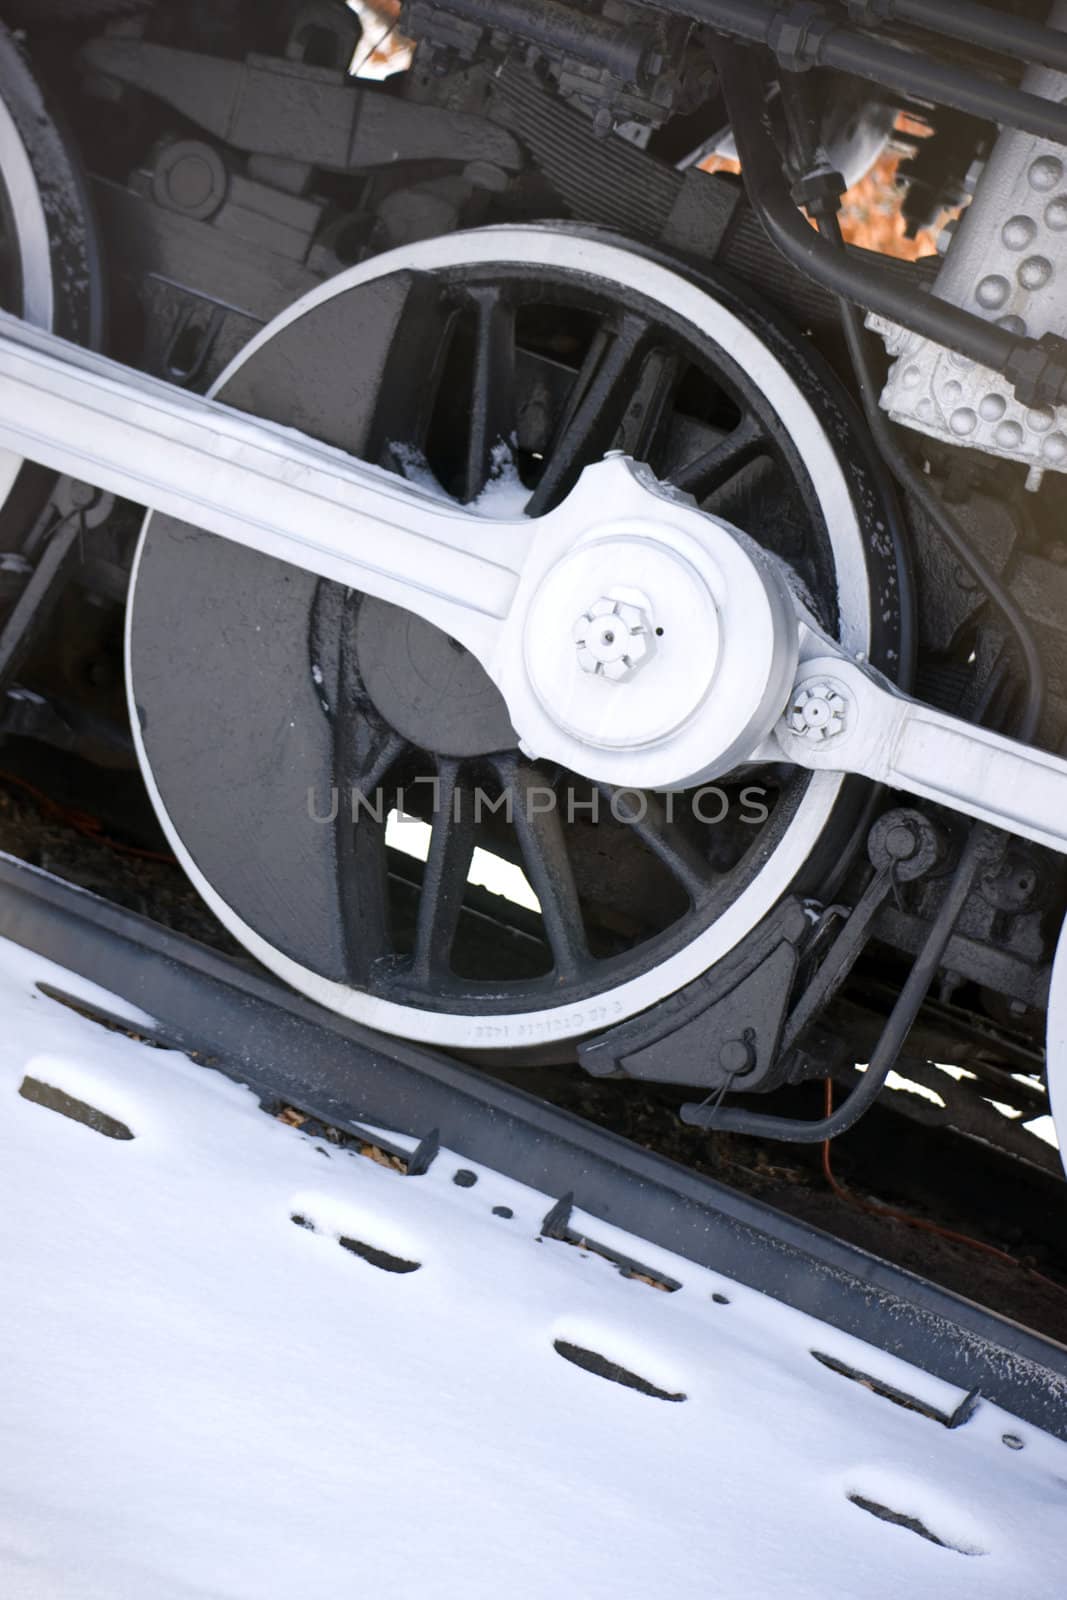 Drive wheel of a vintage train